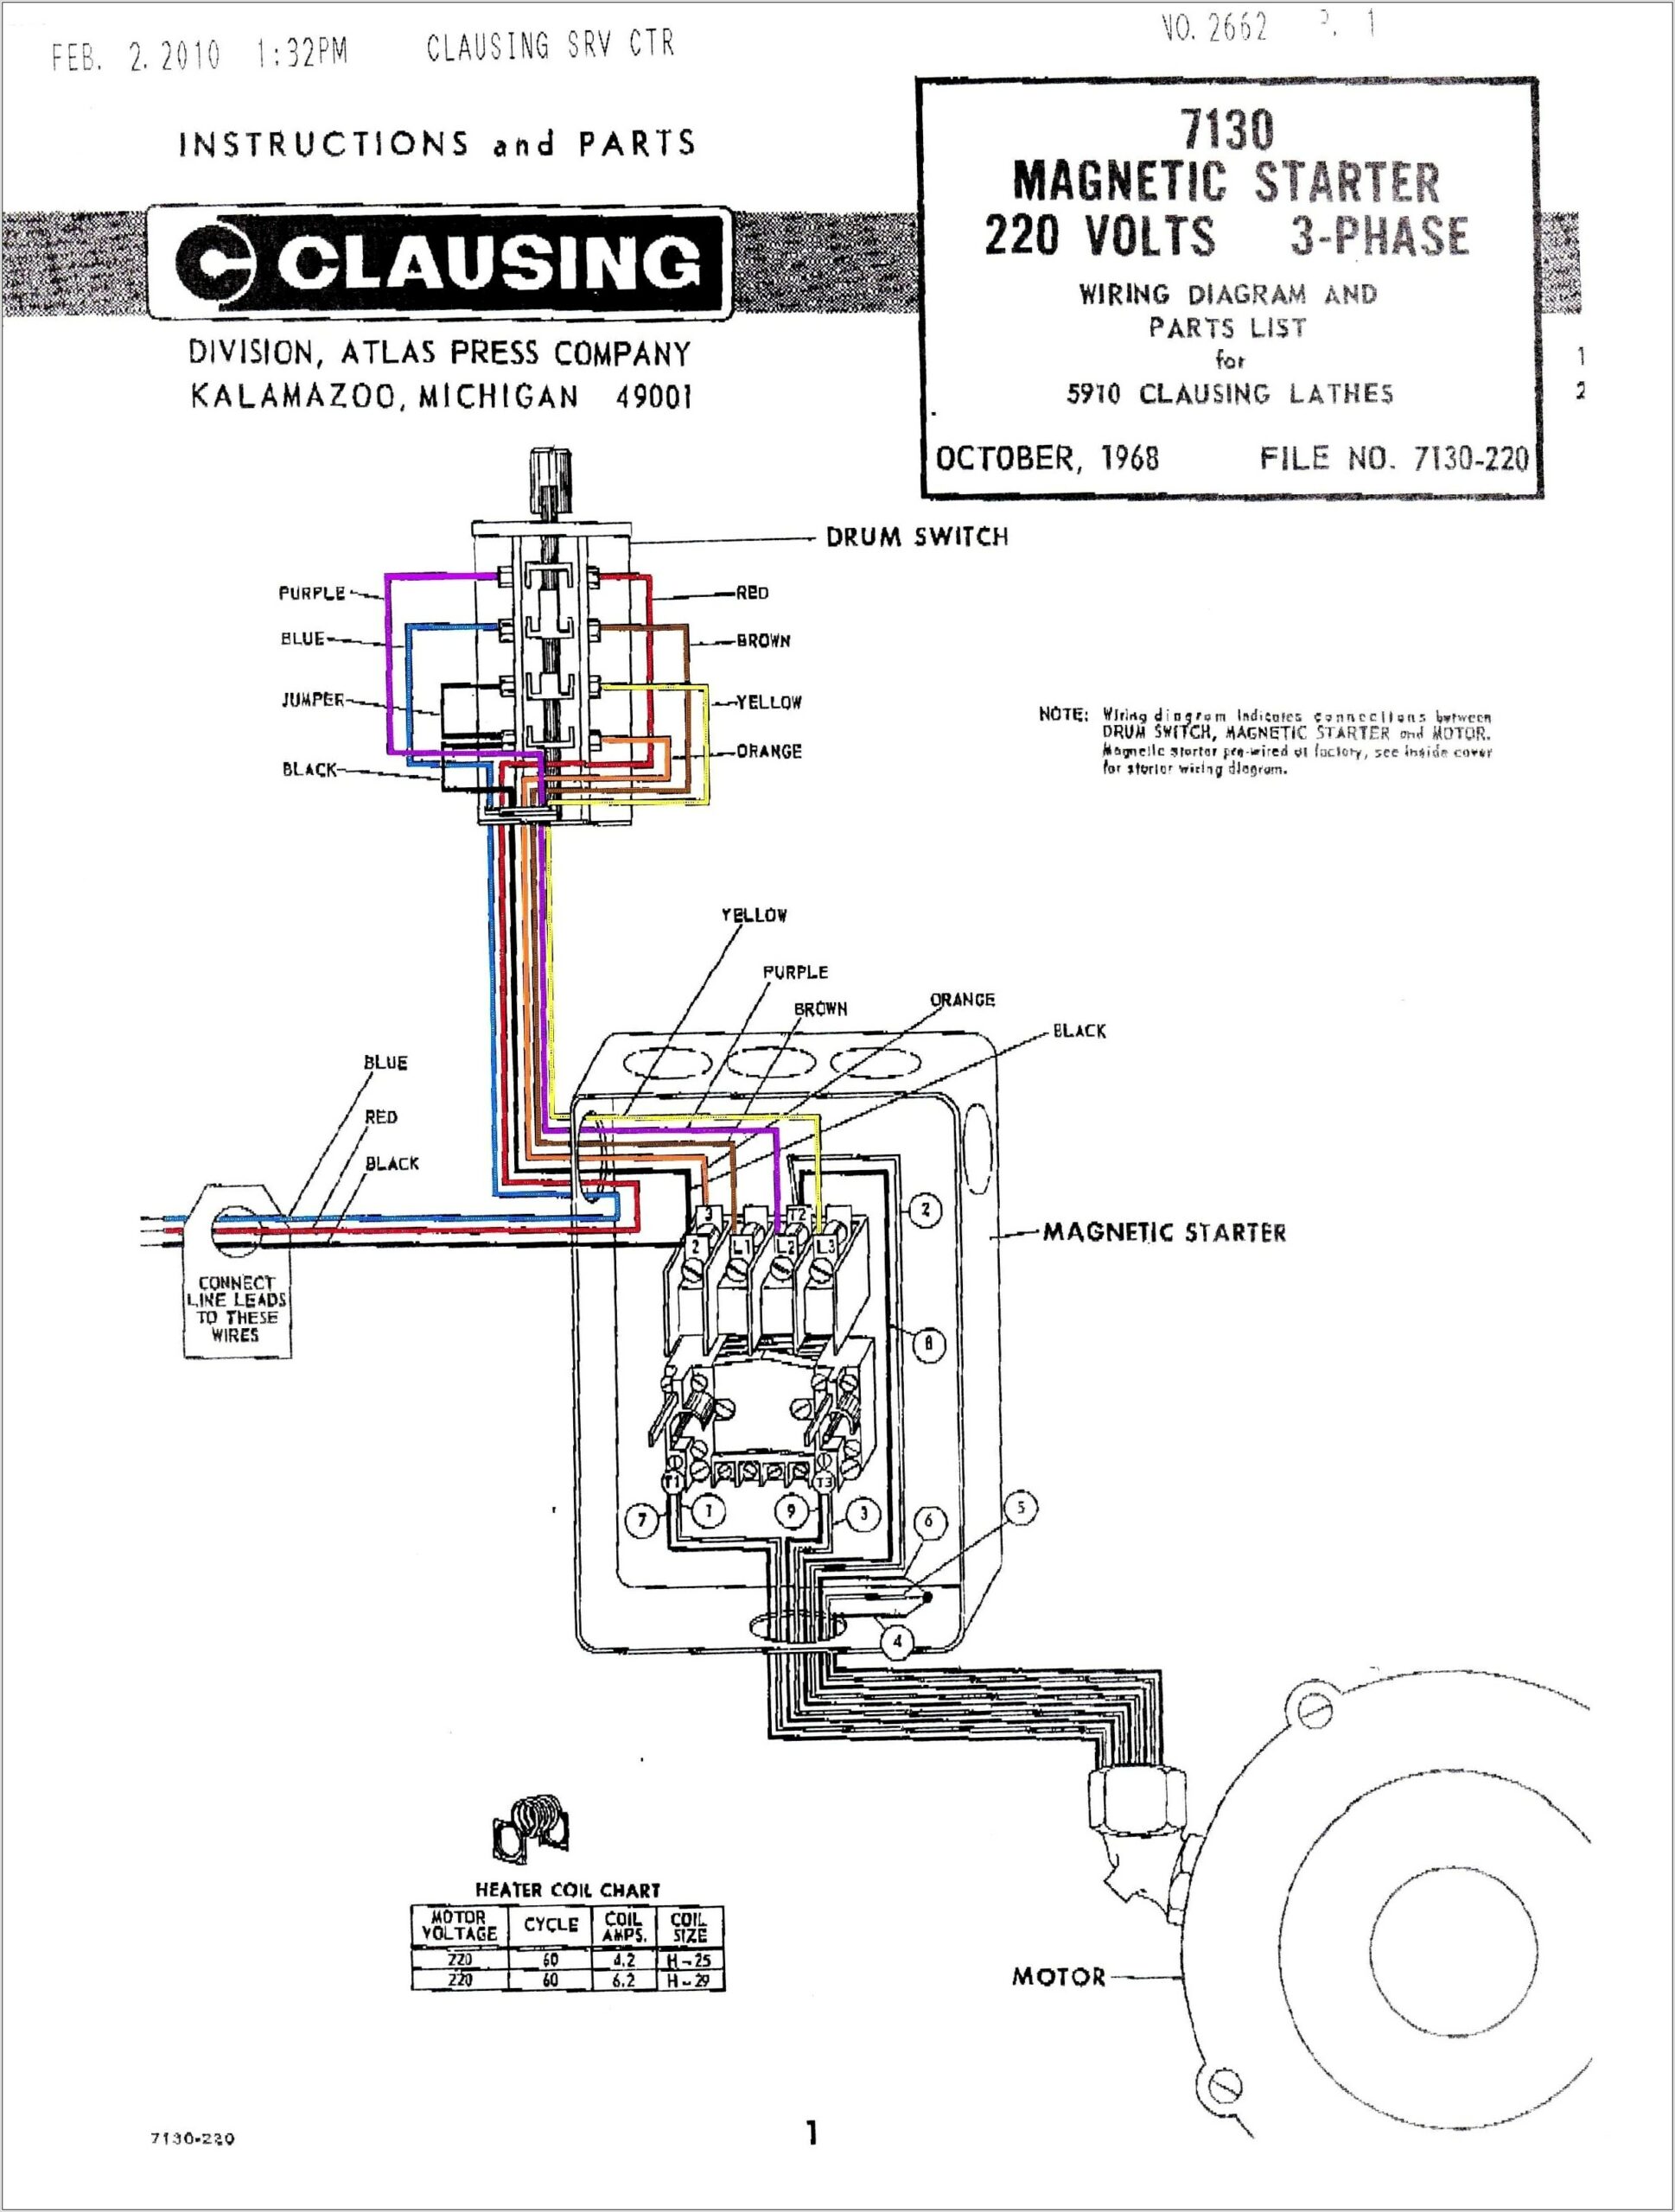 Square D Motor Starter Wiring Diagram